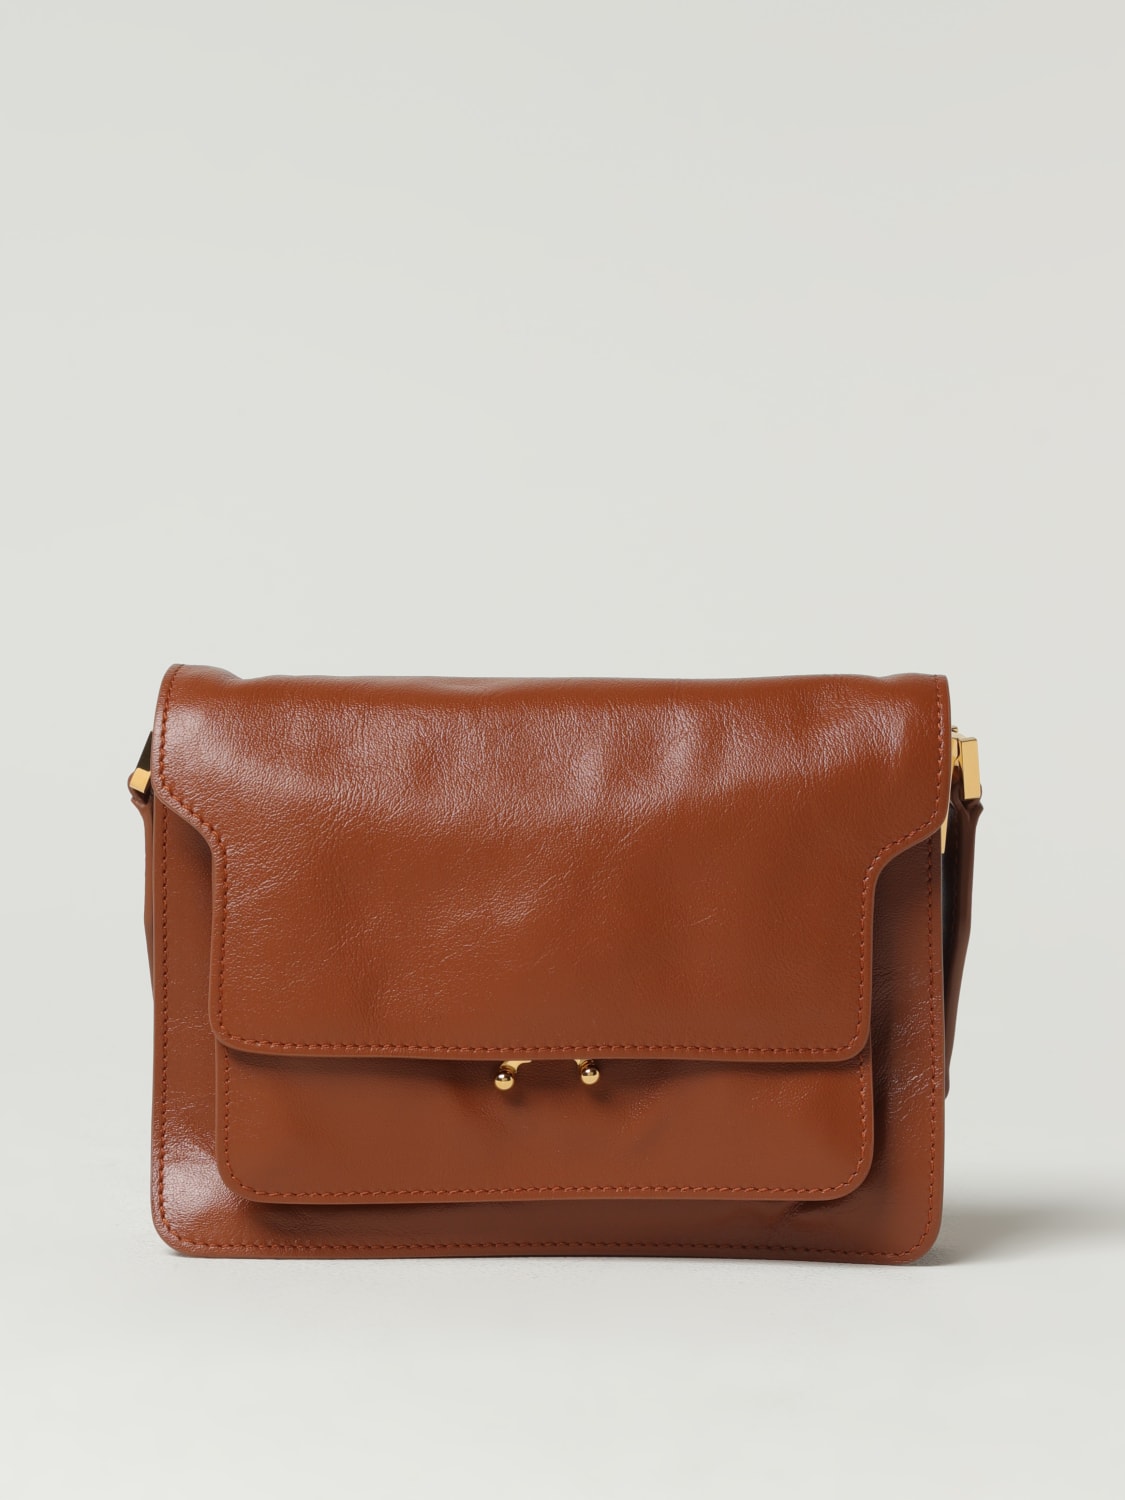 MARNI: Trunk Soft bag in tumbled leather - Leather | Marni mini